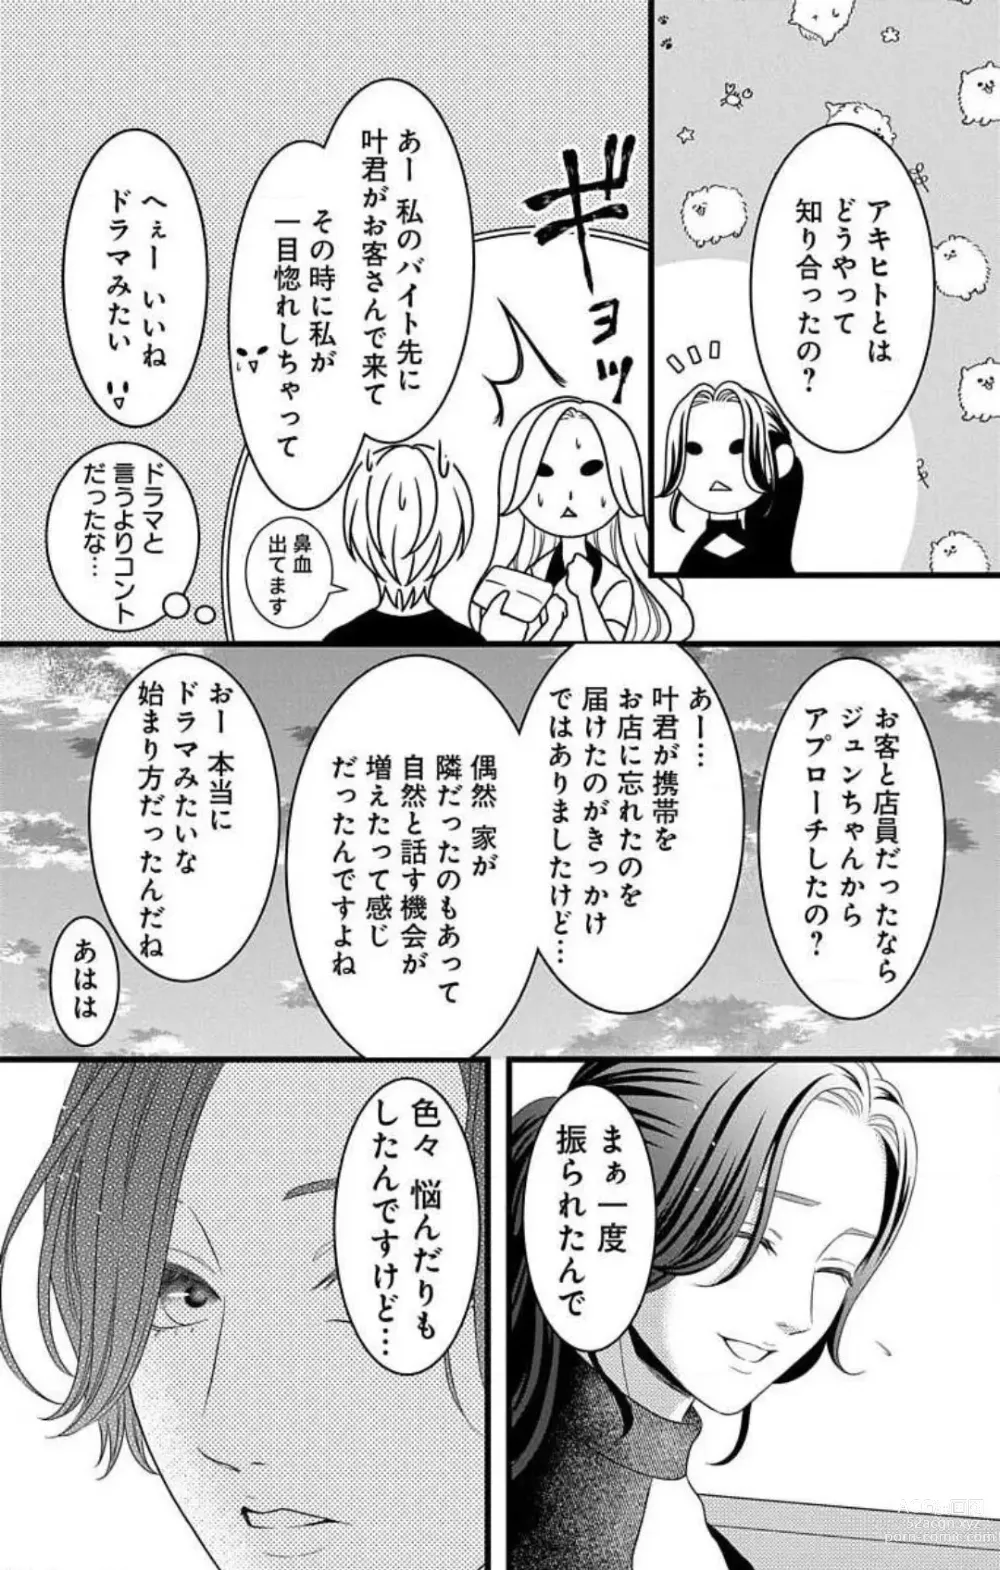 Page 266 of manga Mousou Shoujo 21-27